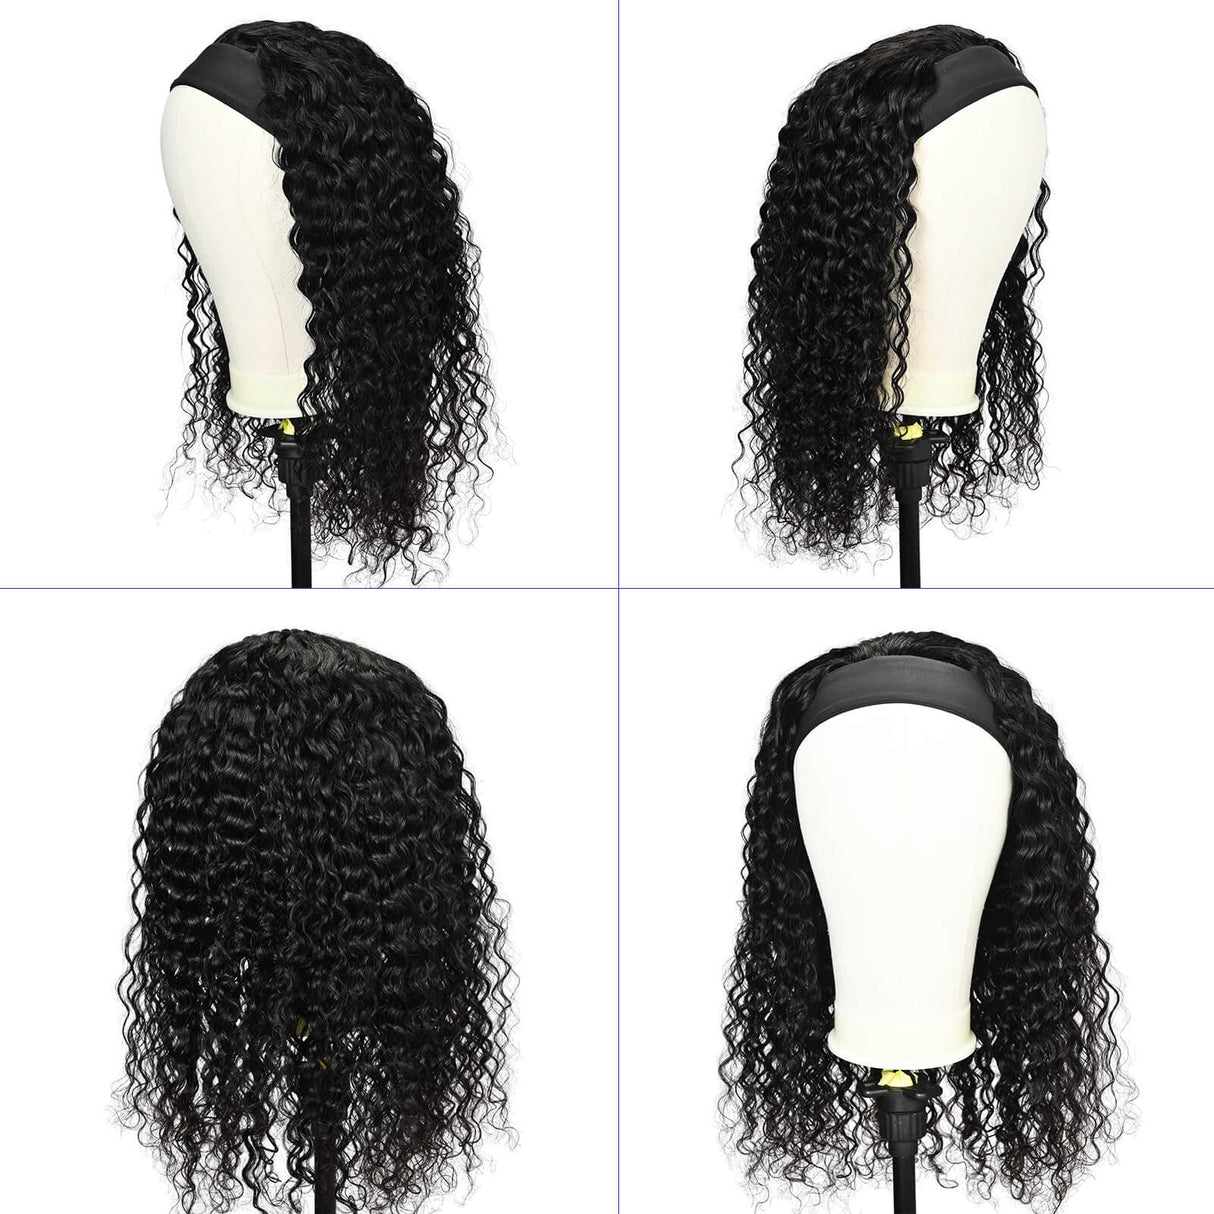 Water Wave Headband Human Hair Wig Black - goldenrulehair